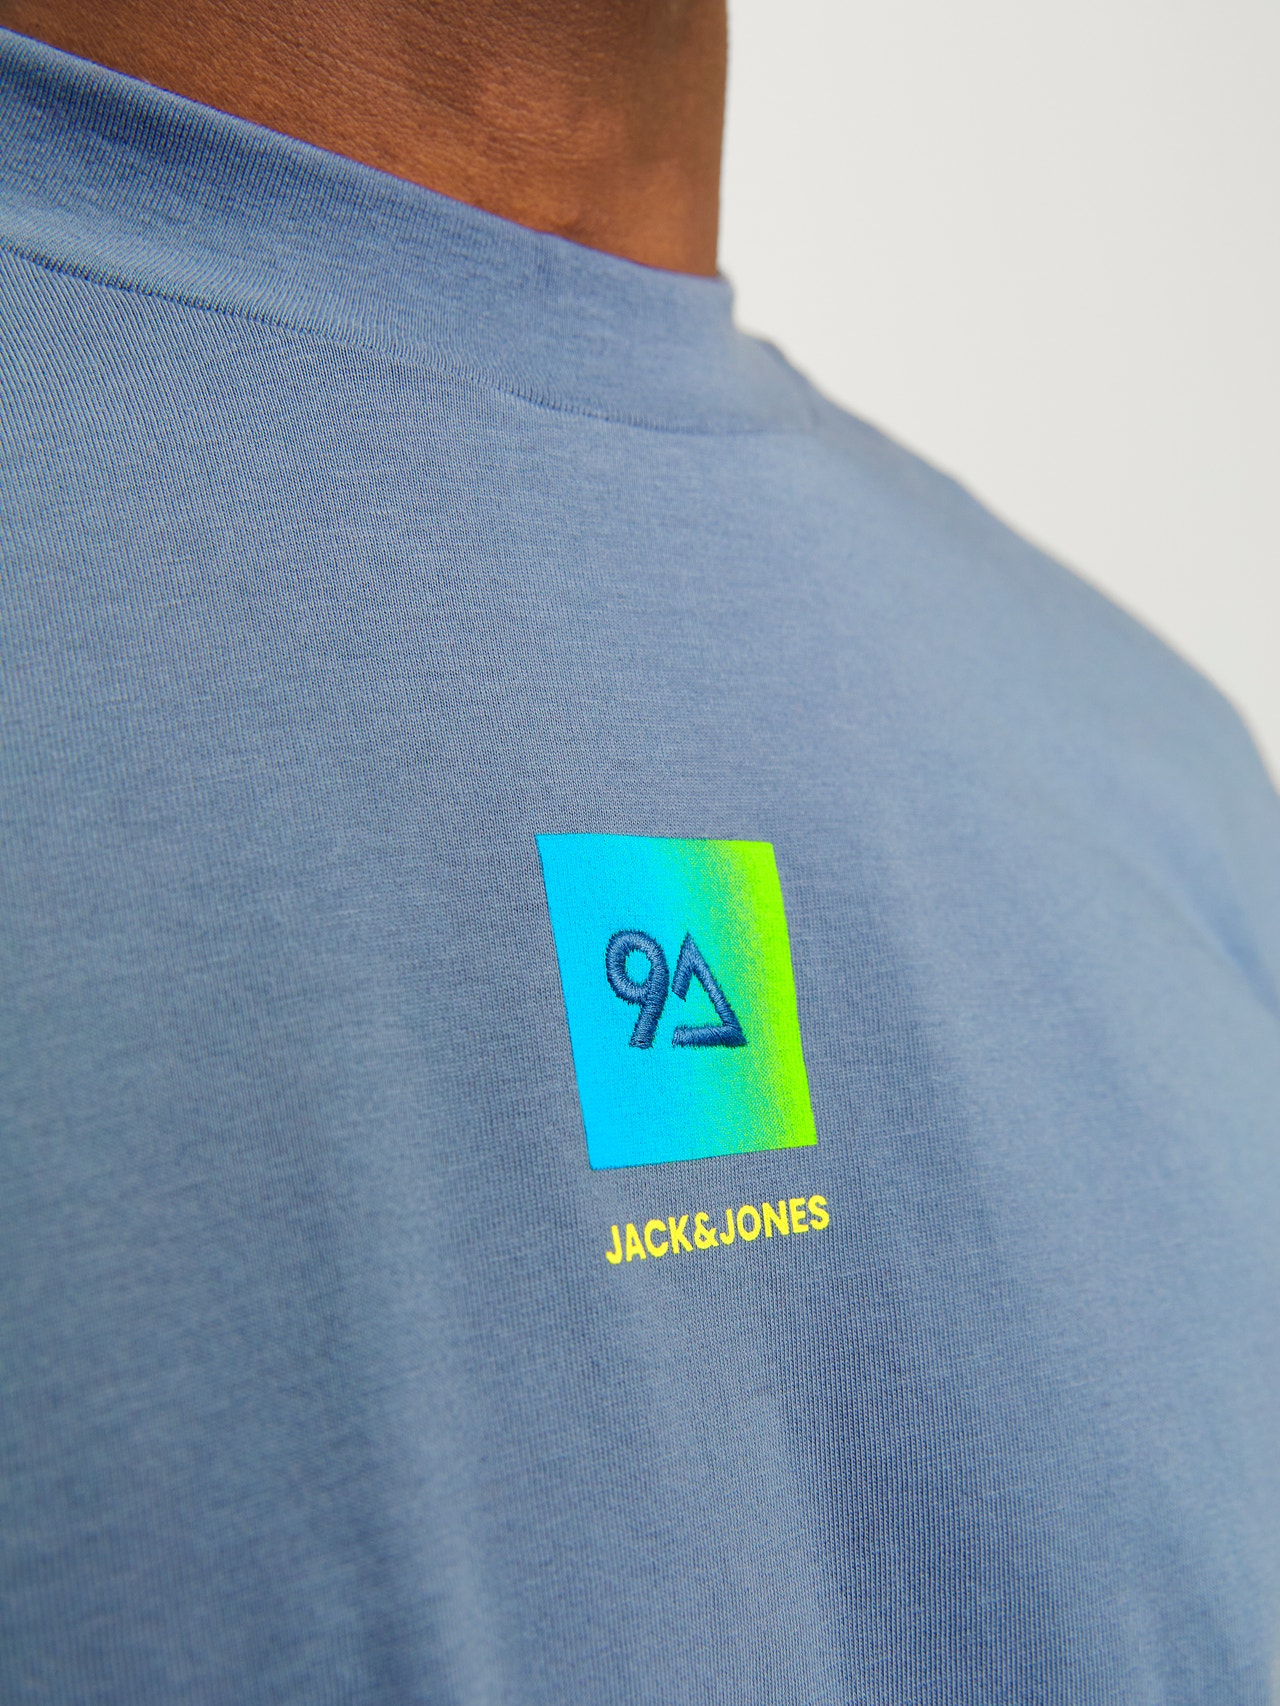 Jack & Jones T-shirt Estampar Decote Redondo -Flint Stone - 12256560